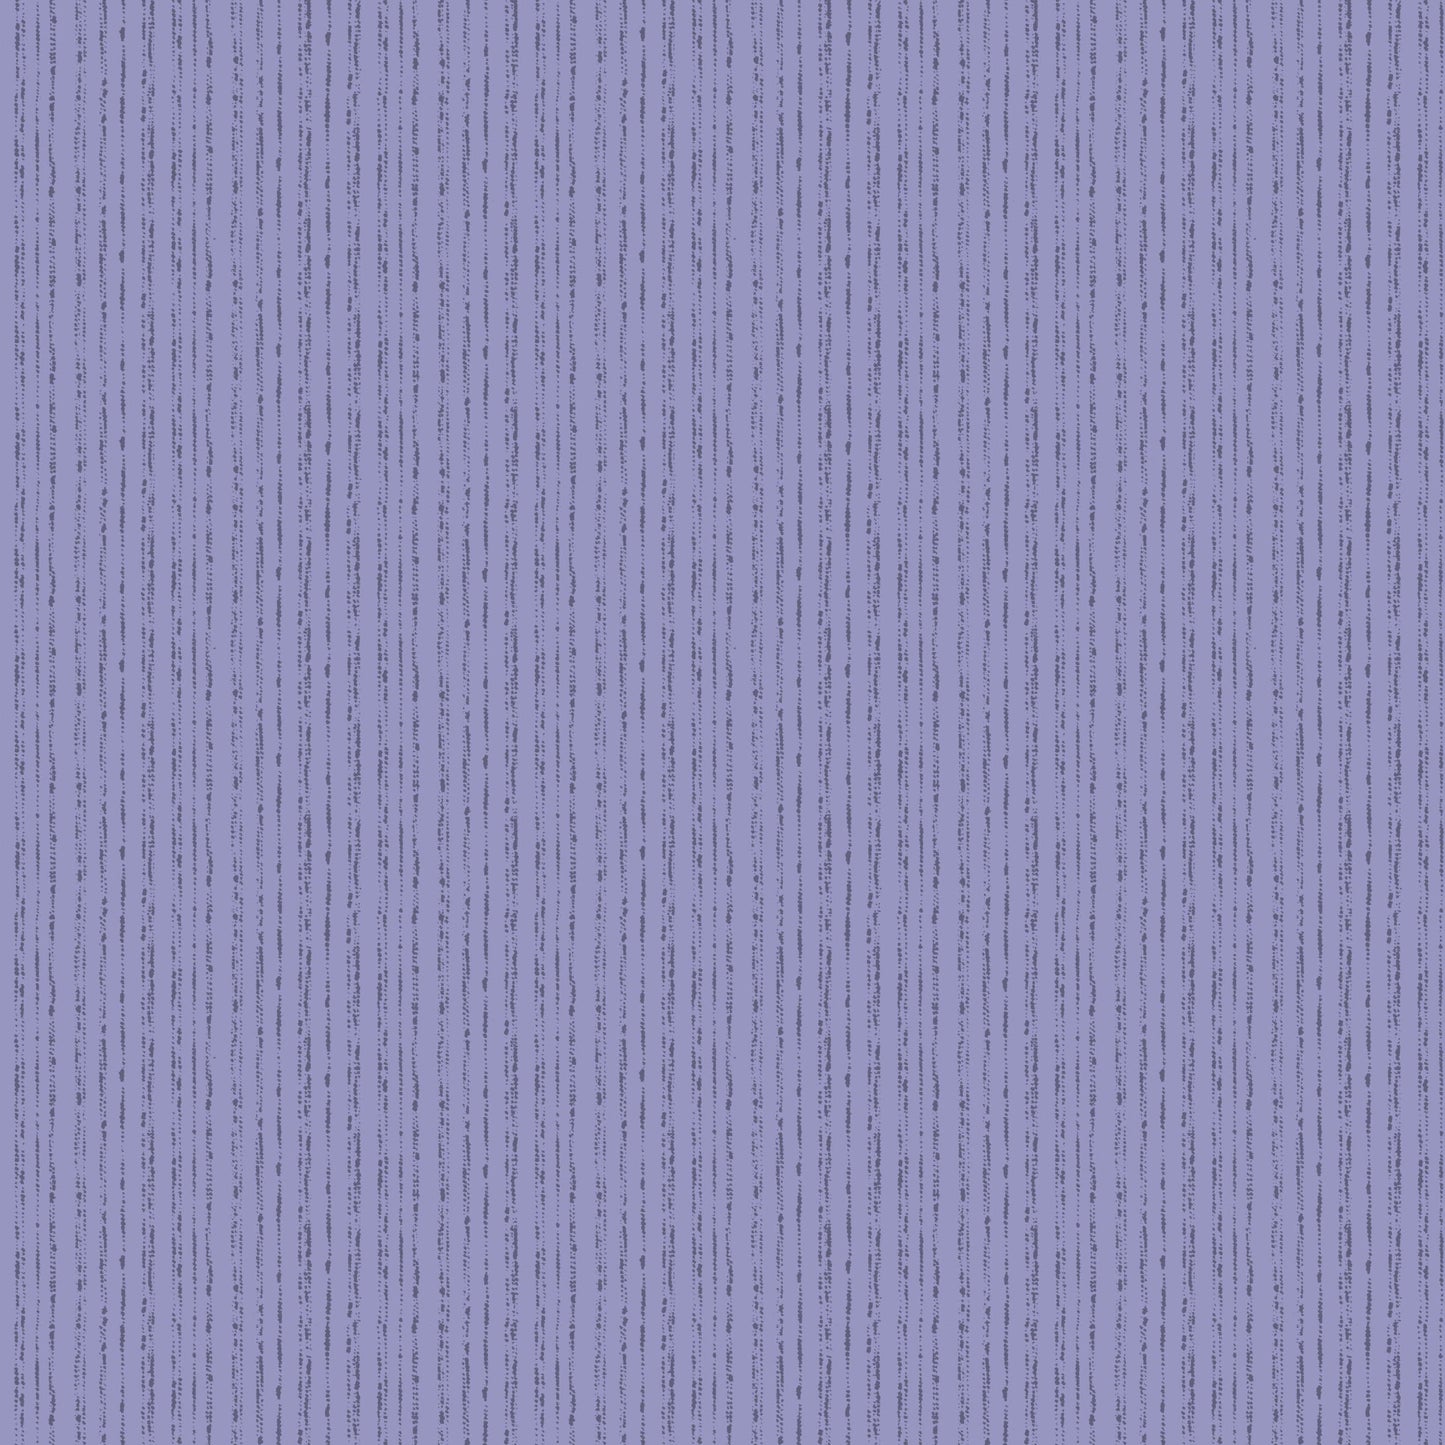 Makower Fabric Avalon Weft Purple A702P